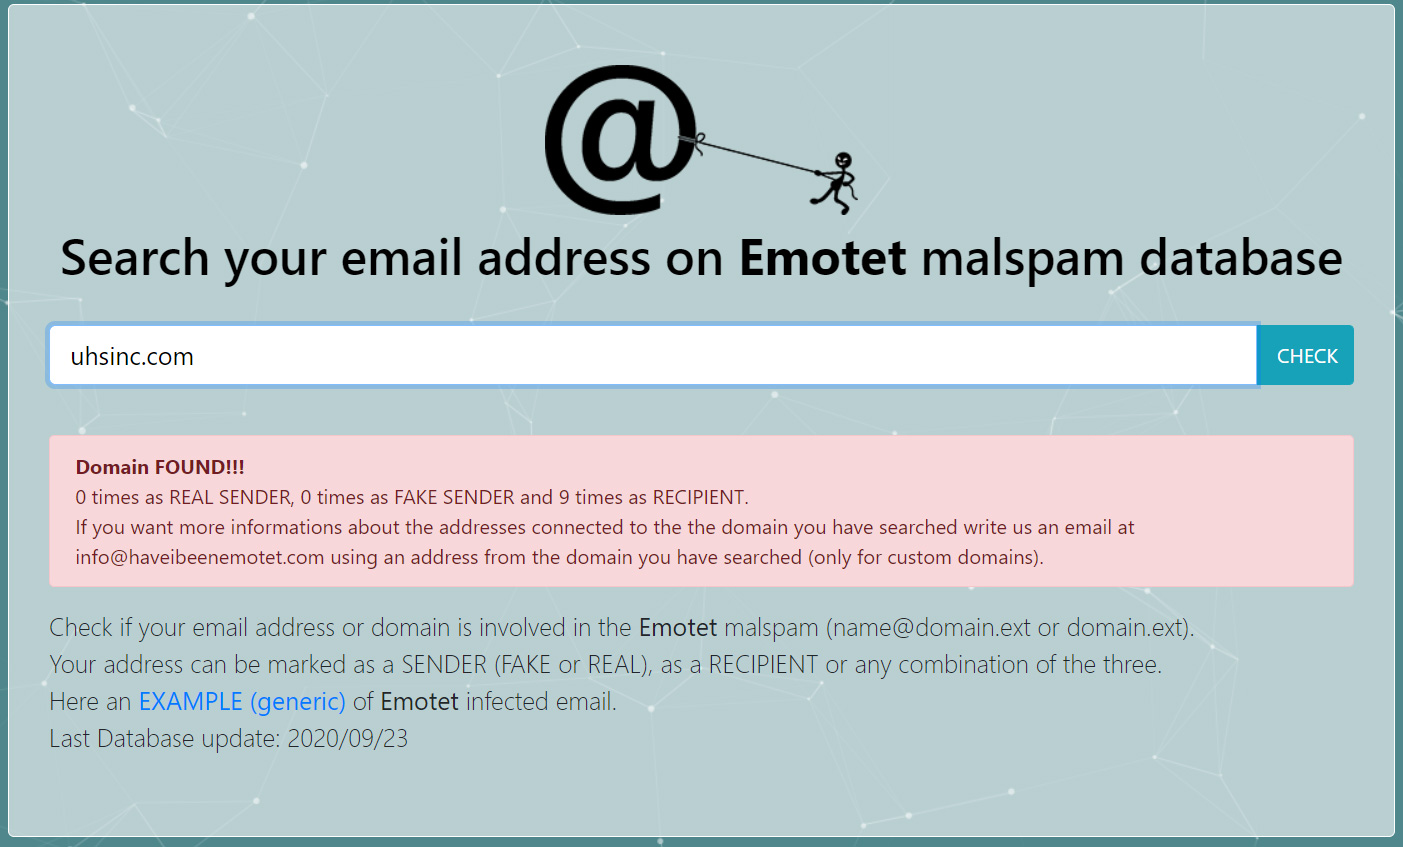 Emotet emails targeting uhsinc.com